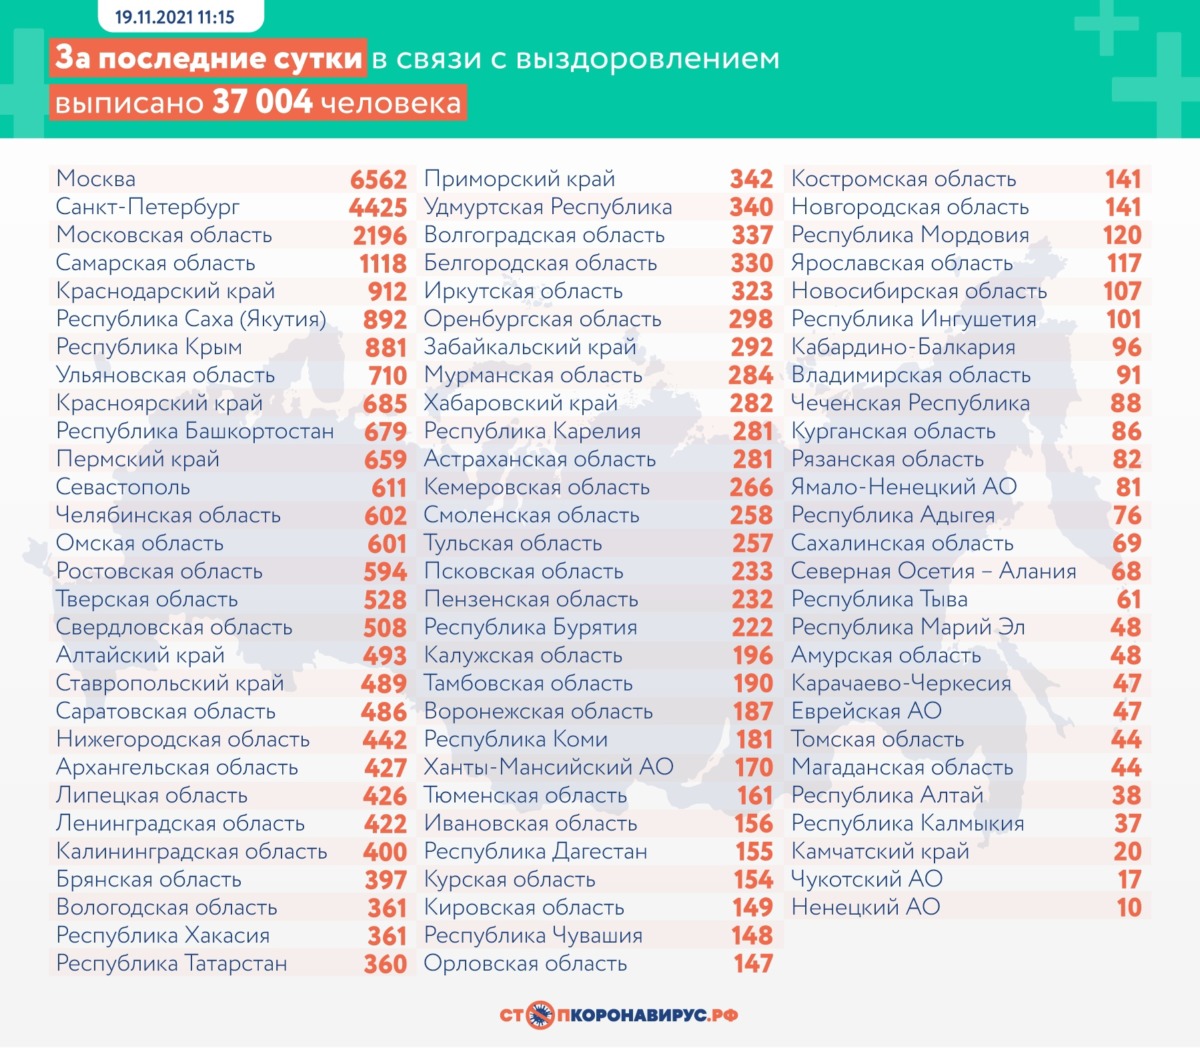 Оперативная статистика в России по коронавирусу на 19 ноября